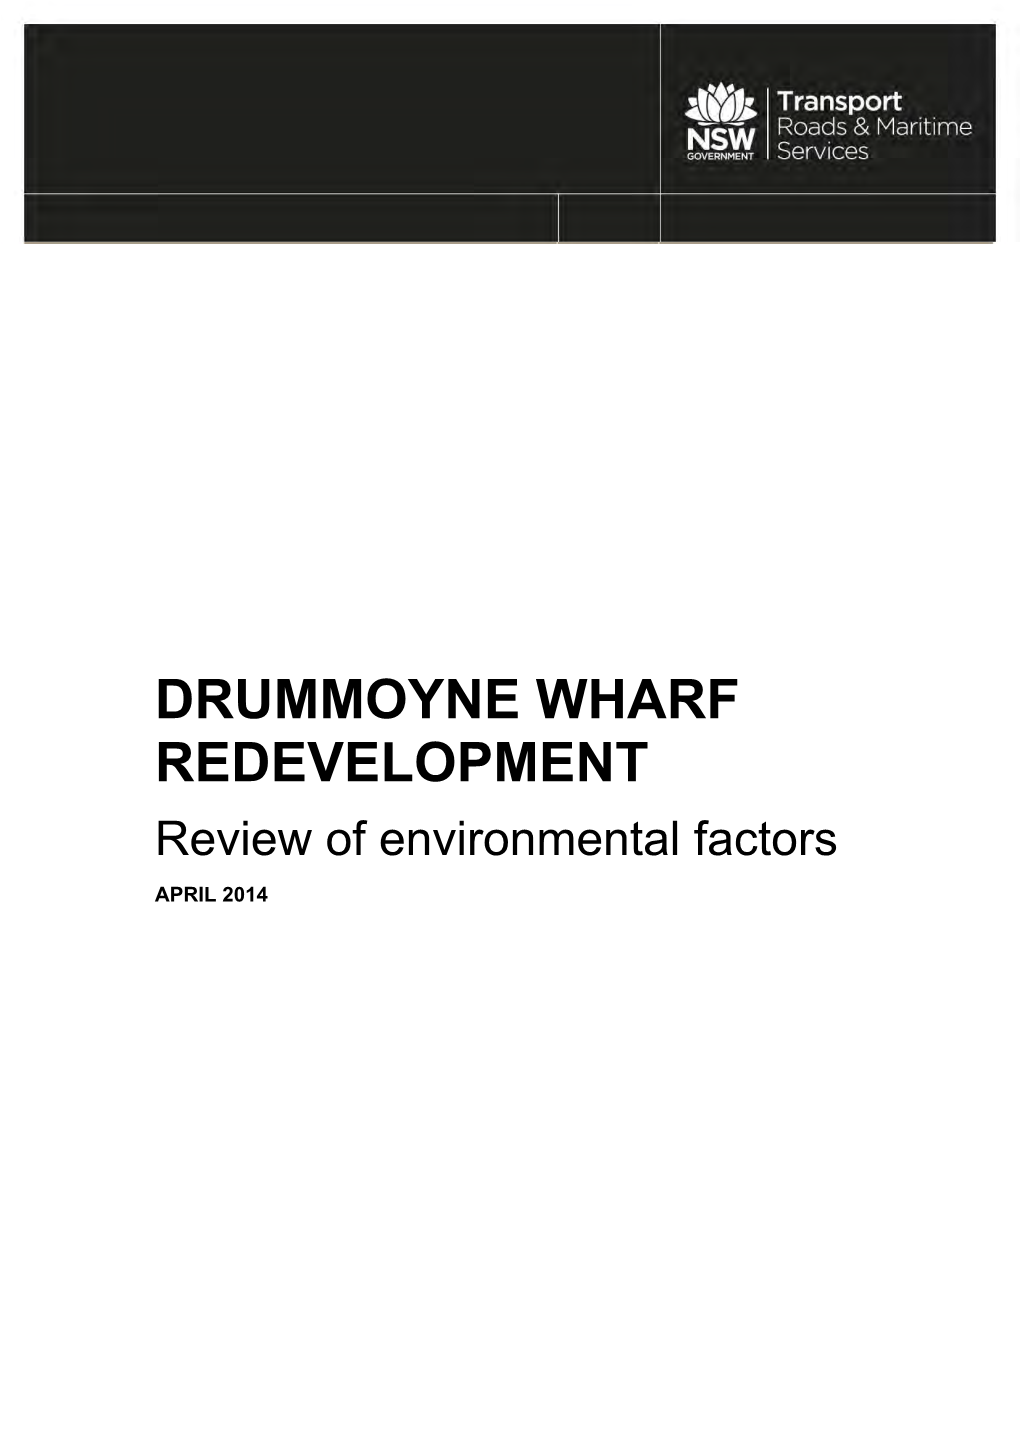 DRUMMOYNE WHARF REDEVELOPMENT Review of Environmental Factors APRIL 2014